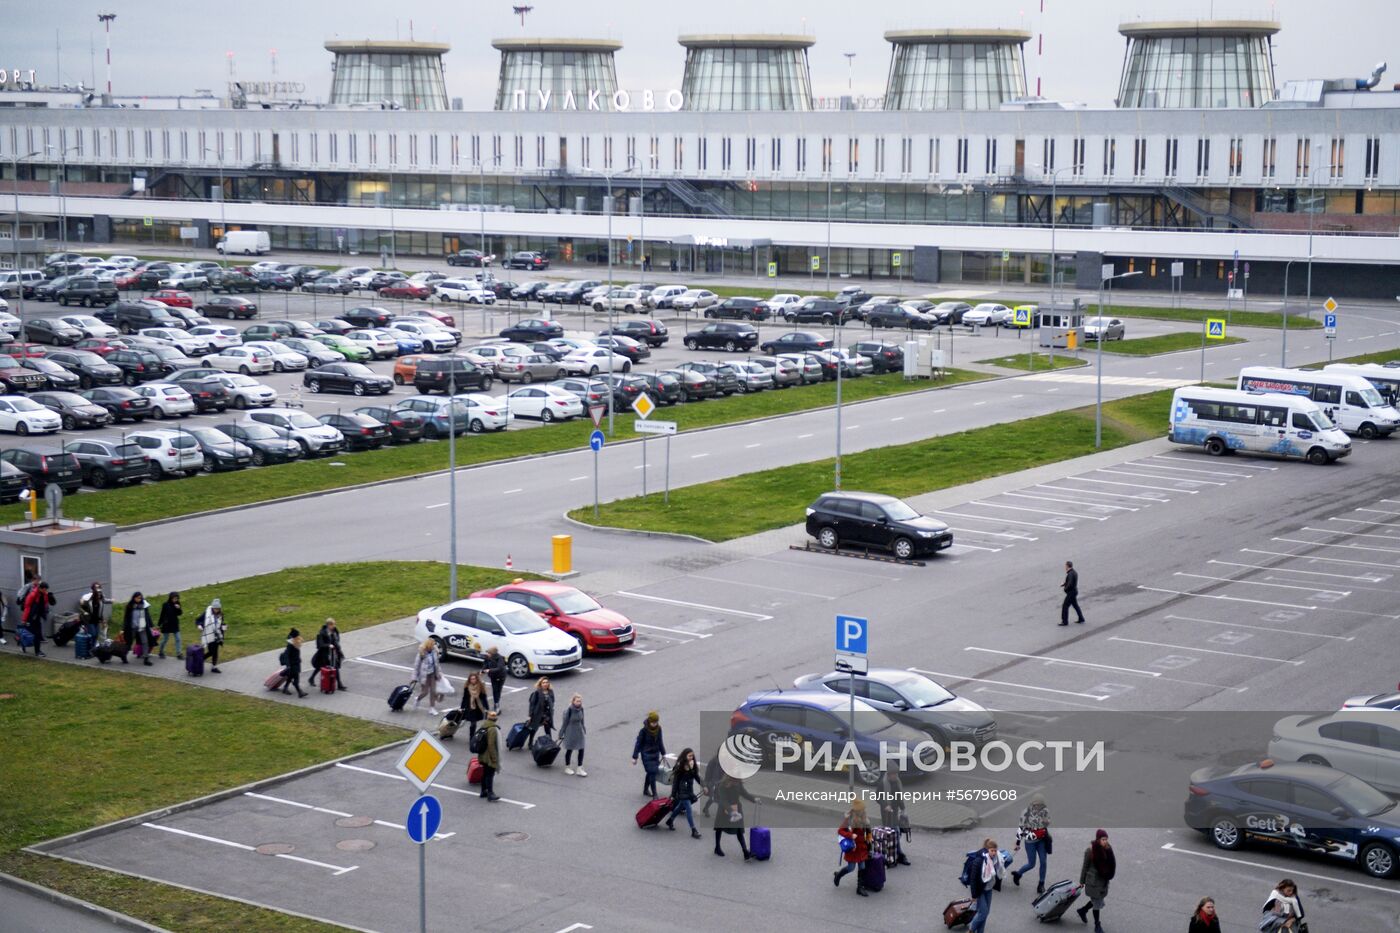 Аэропорт "Пулково" в Санкт-Петербурге